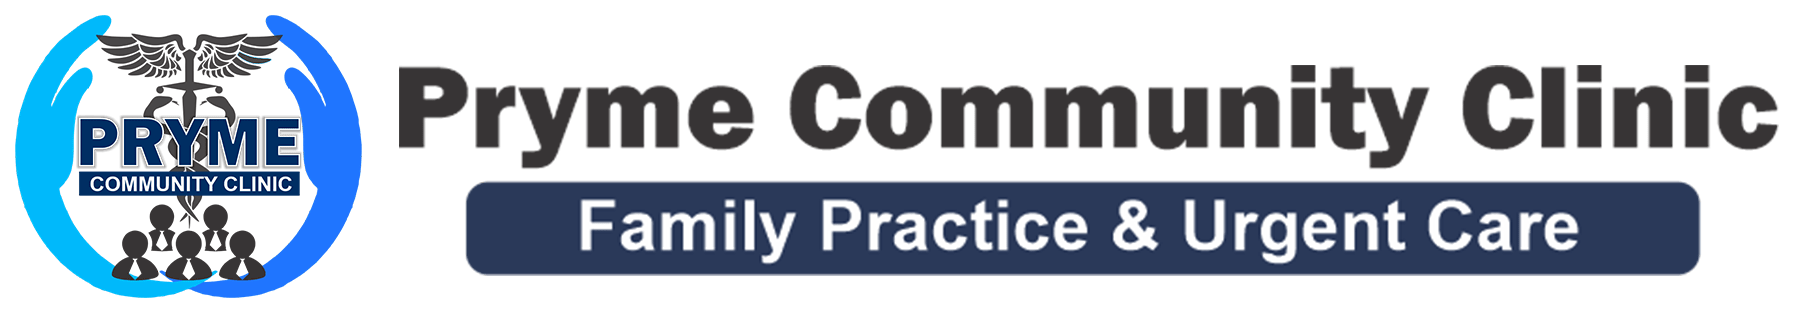 Pryme Community Clinic full logo